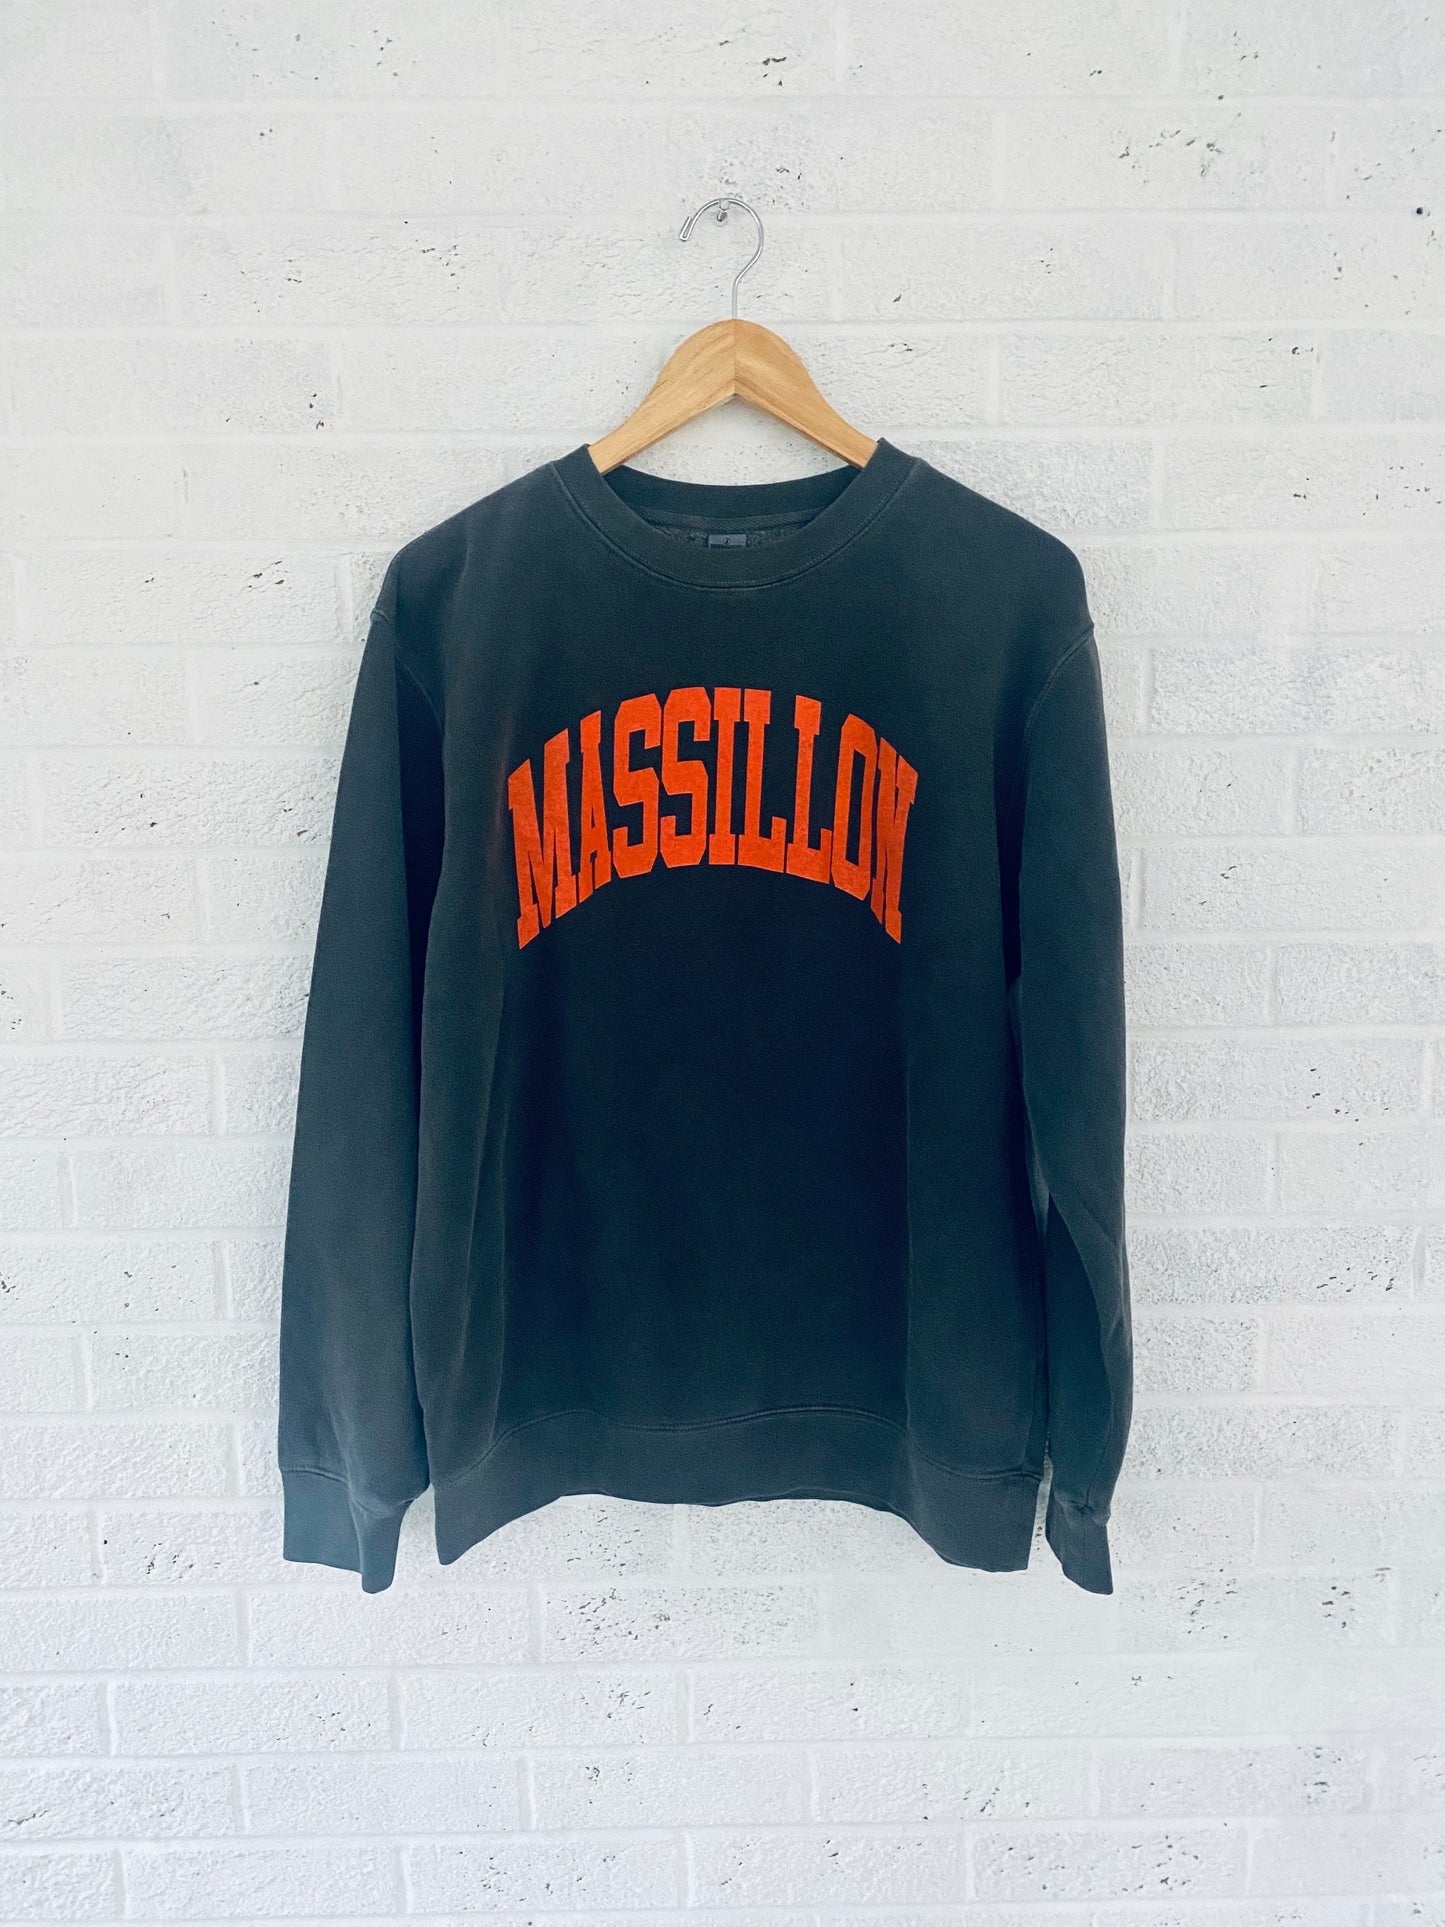 Massillon Arch Vintage Adult Sweatshirt Charcoal Grey